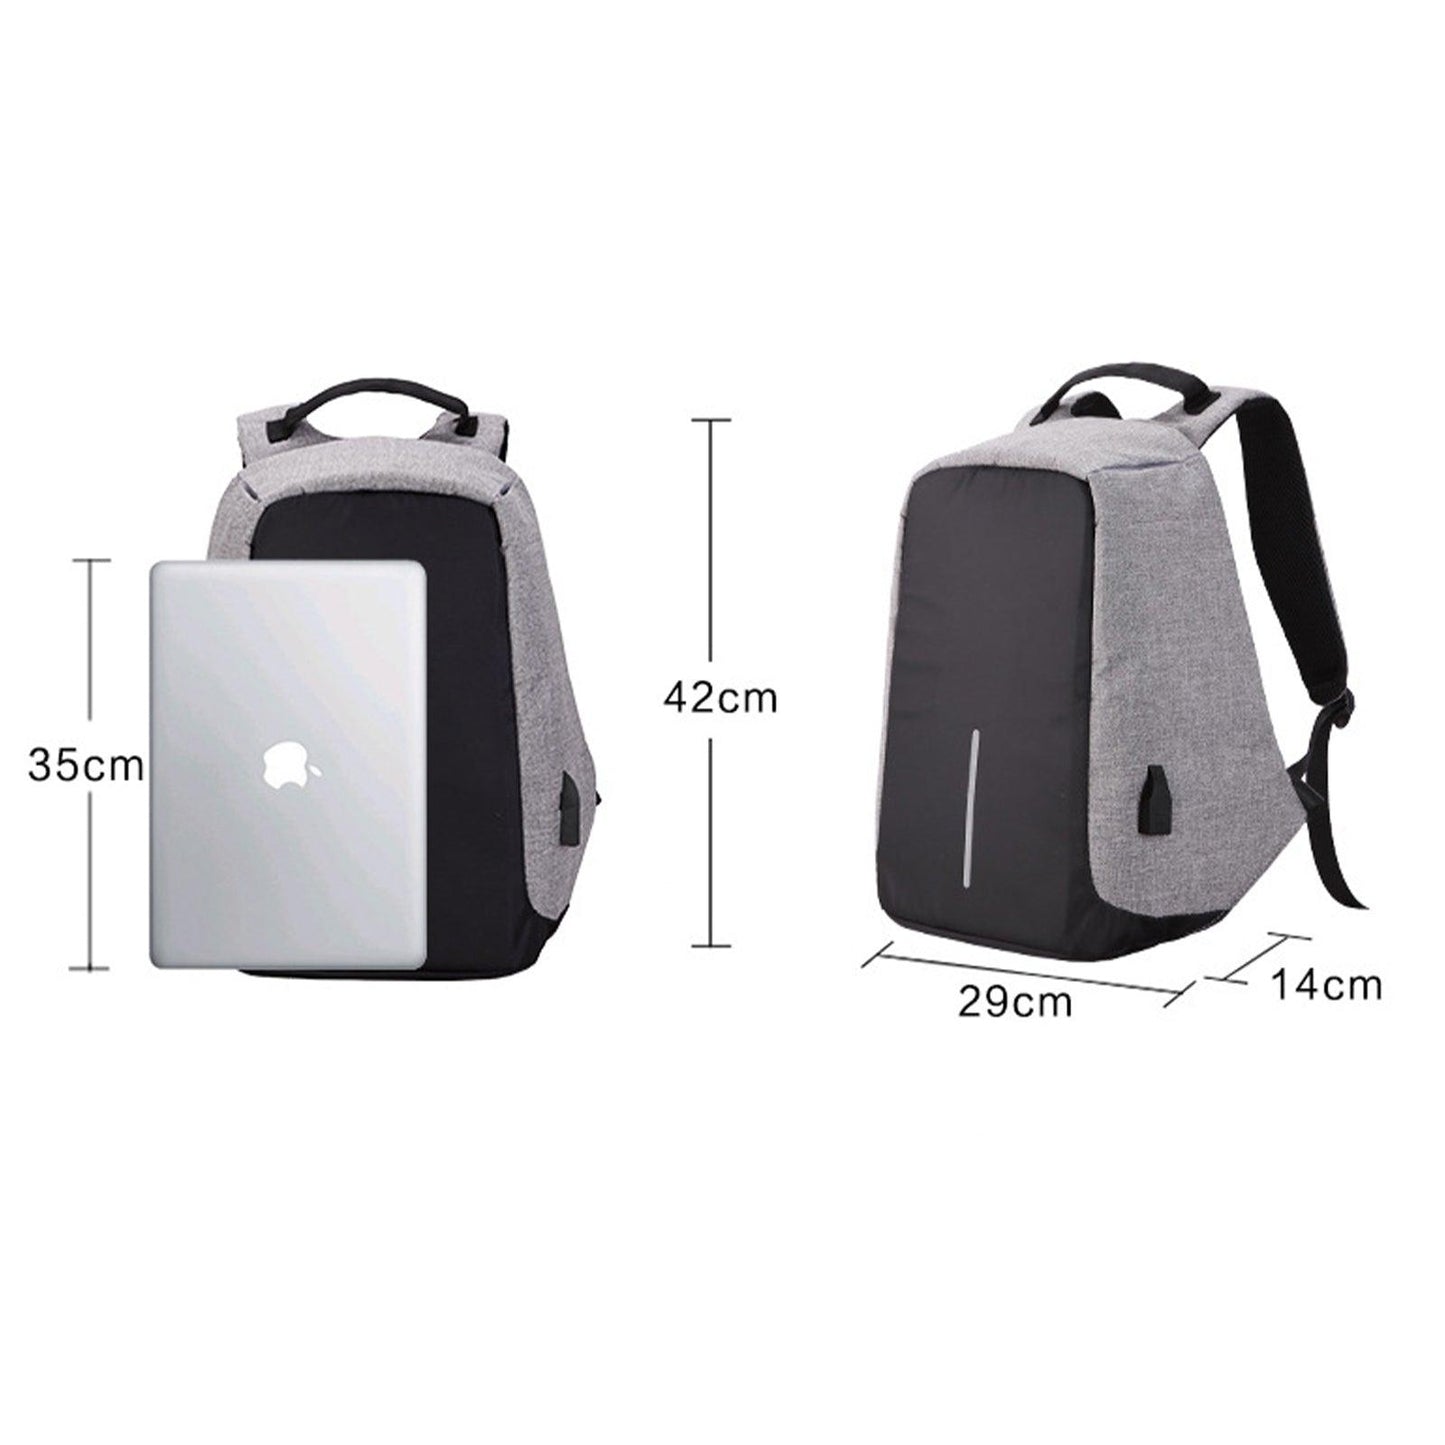 Anti Theft Backpack Waterproof bag School Travel Laptop Bags USB Charging 40 x 31 x 11cm Grey